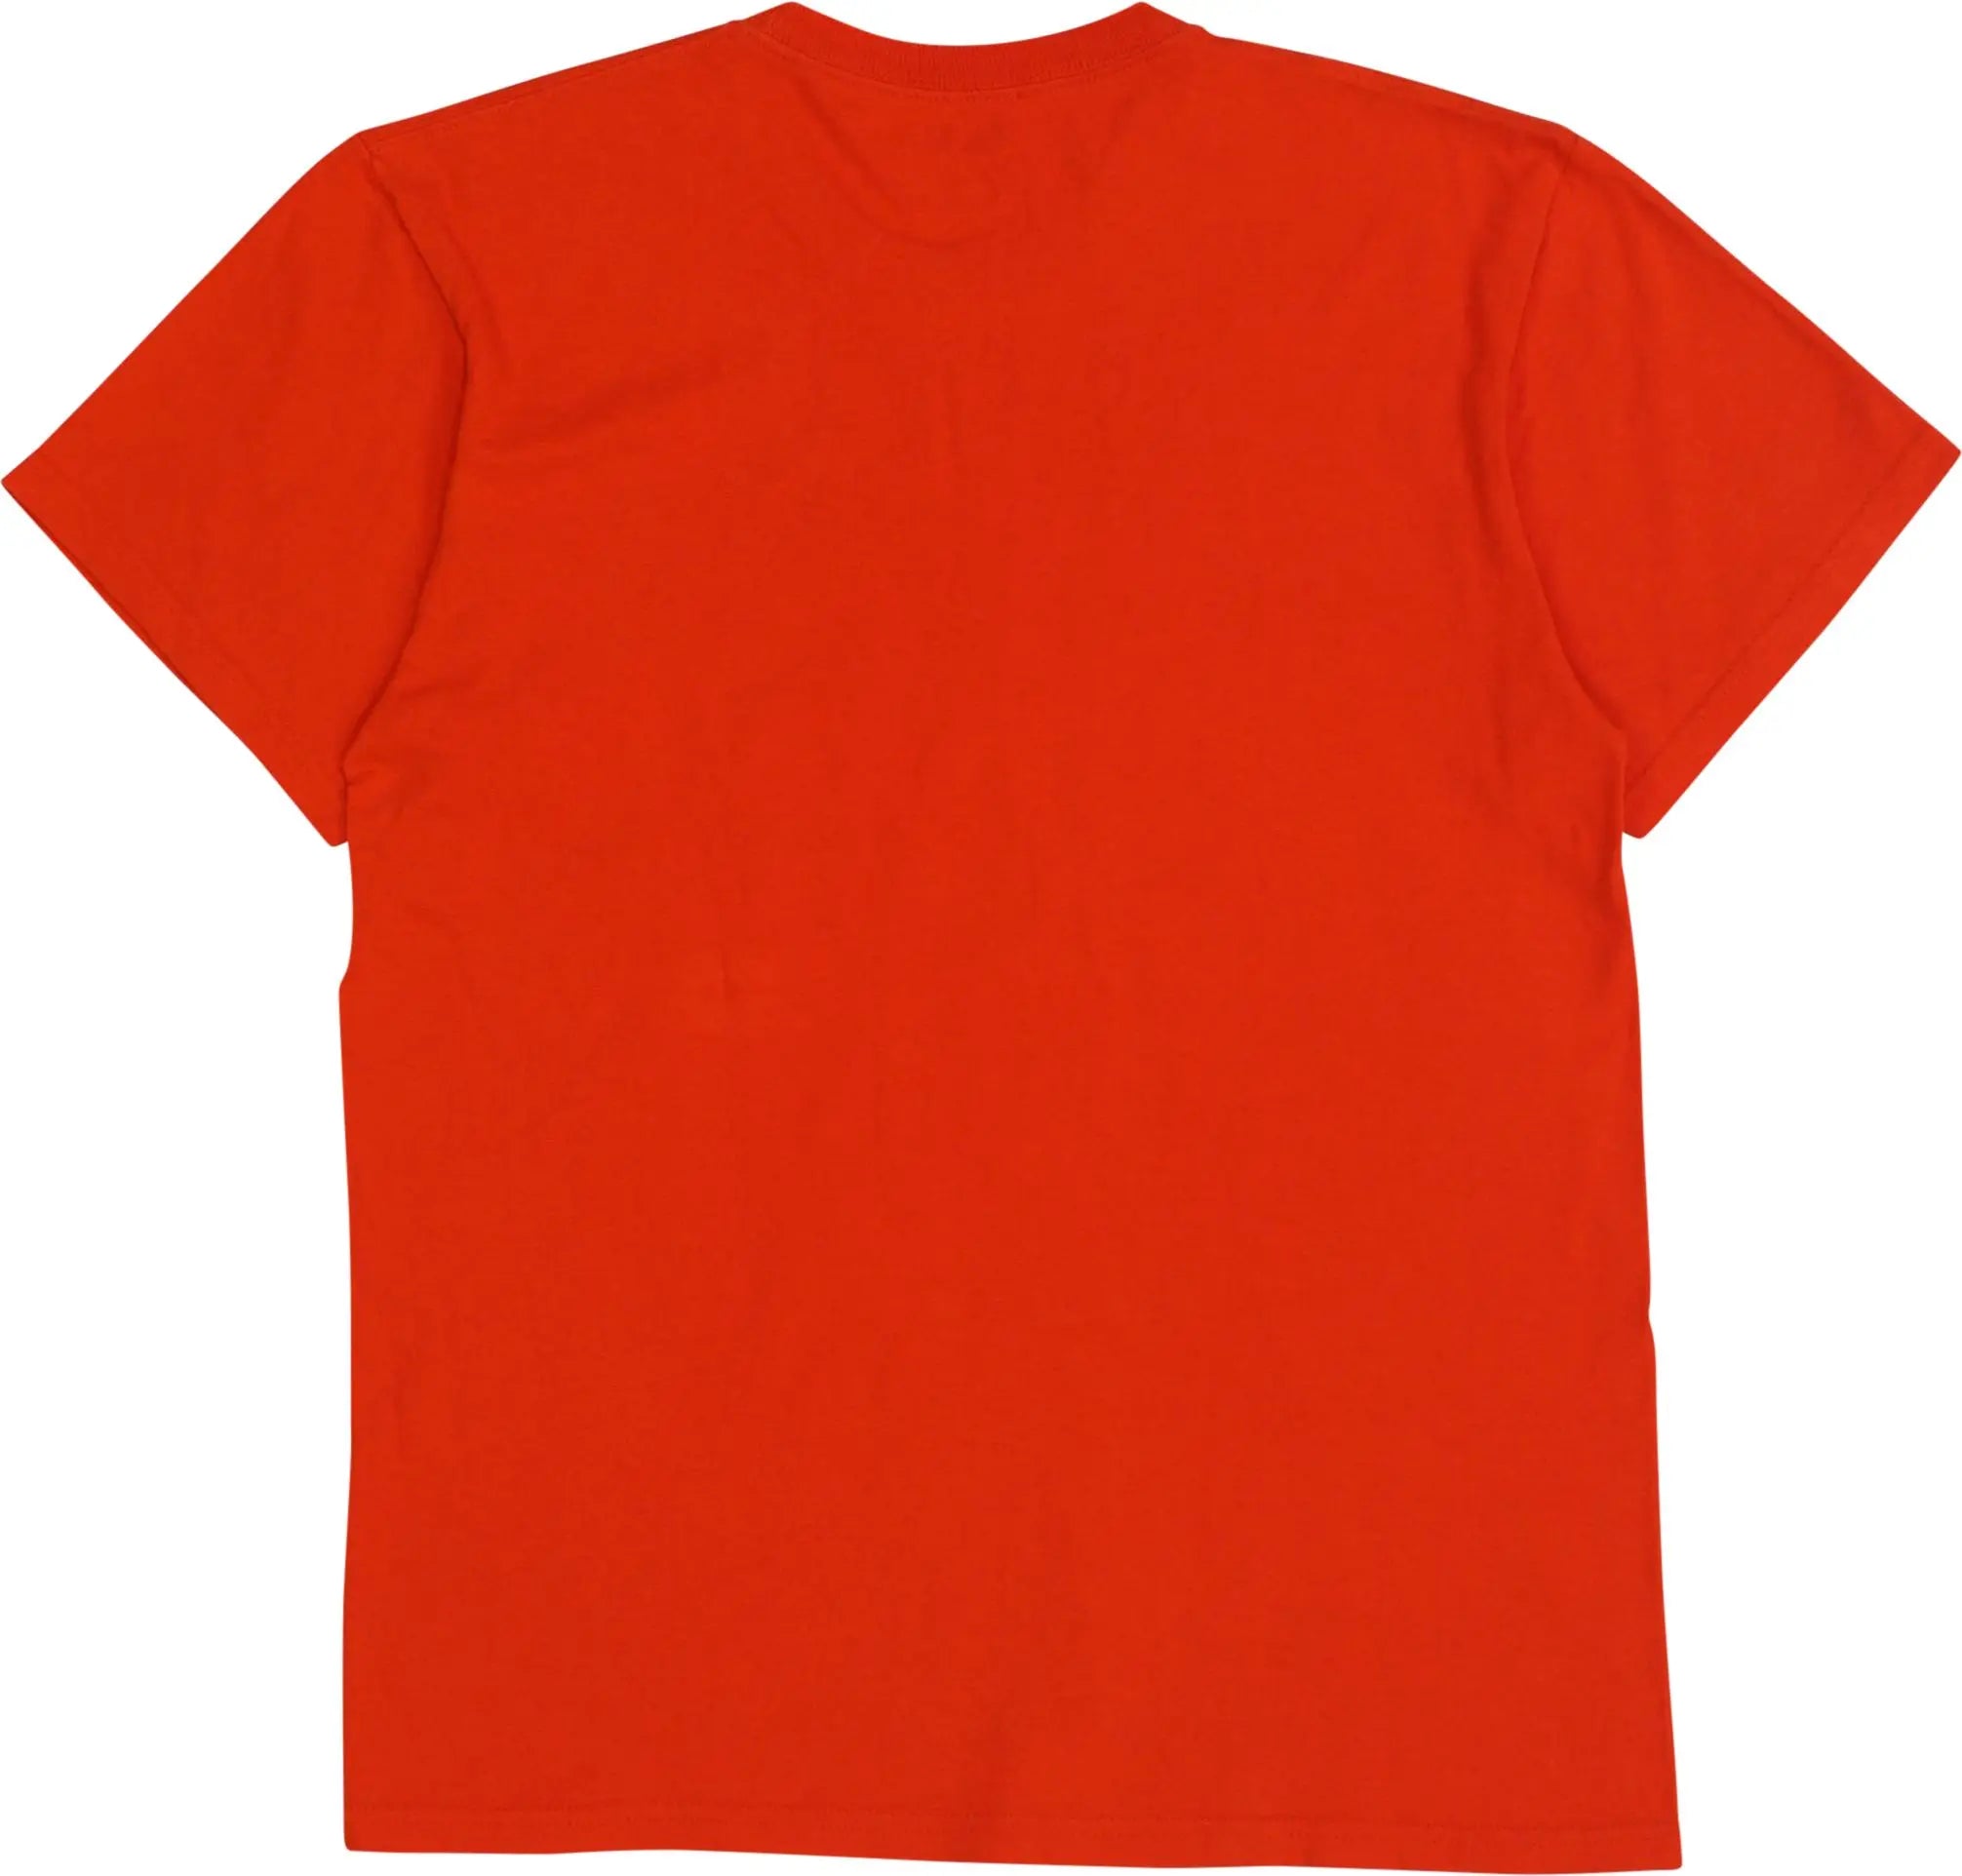 Jansport - Virgina Hoos T-Shirt- ThriftTale.com - Vintage and second handclothing